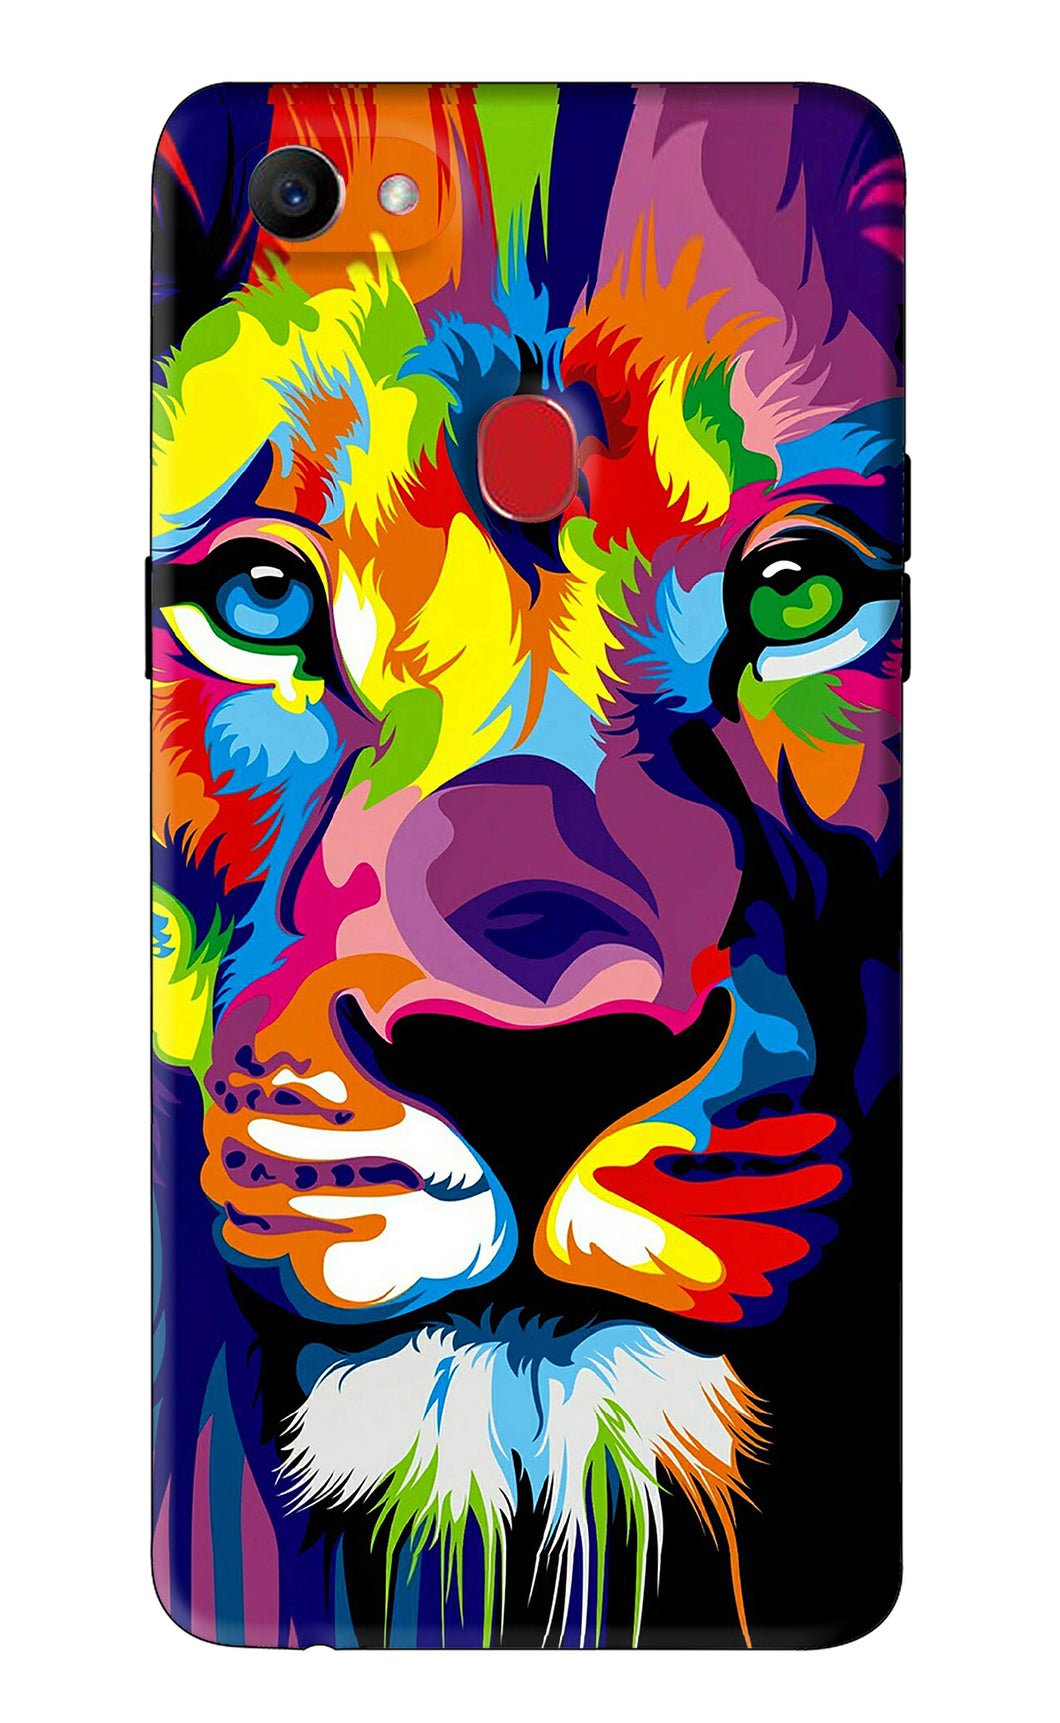 Lion Oppo F7 Back Skin Wrap